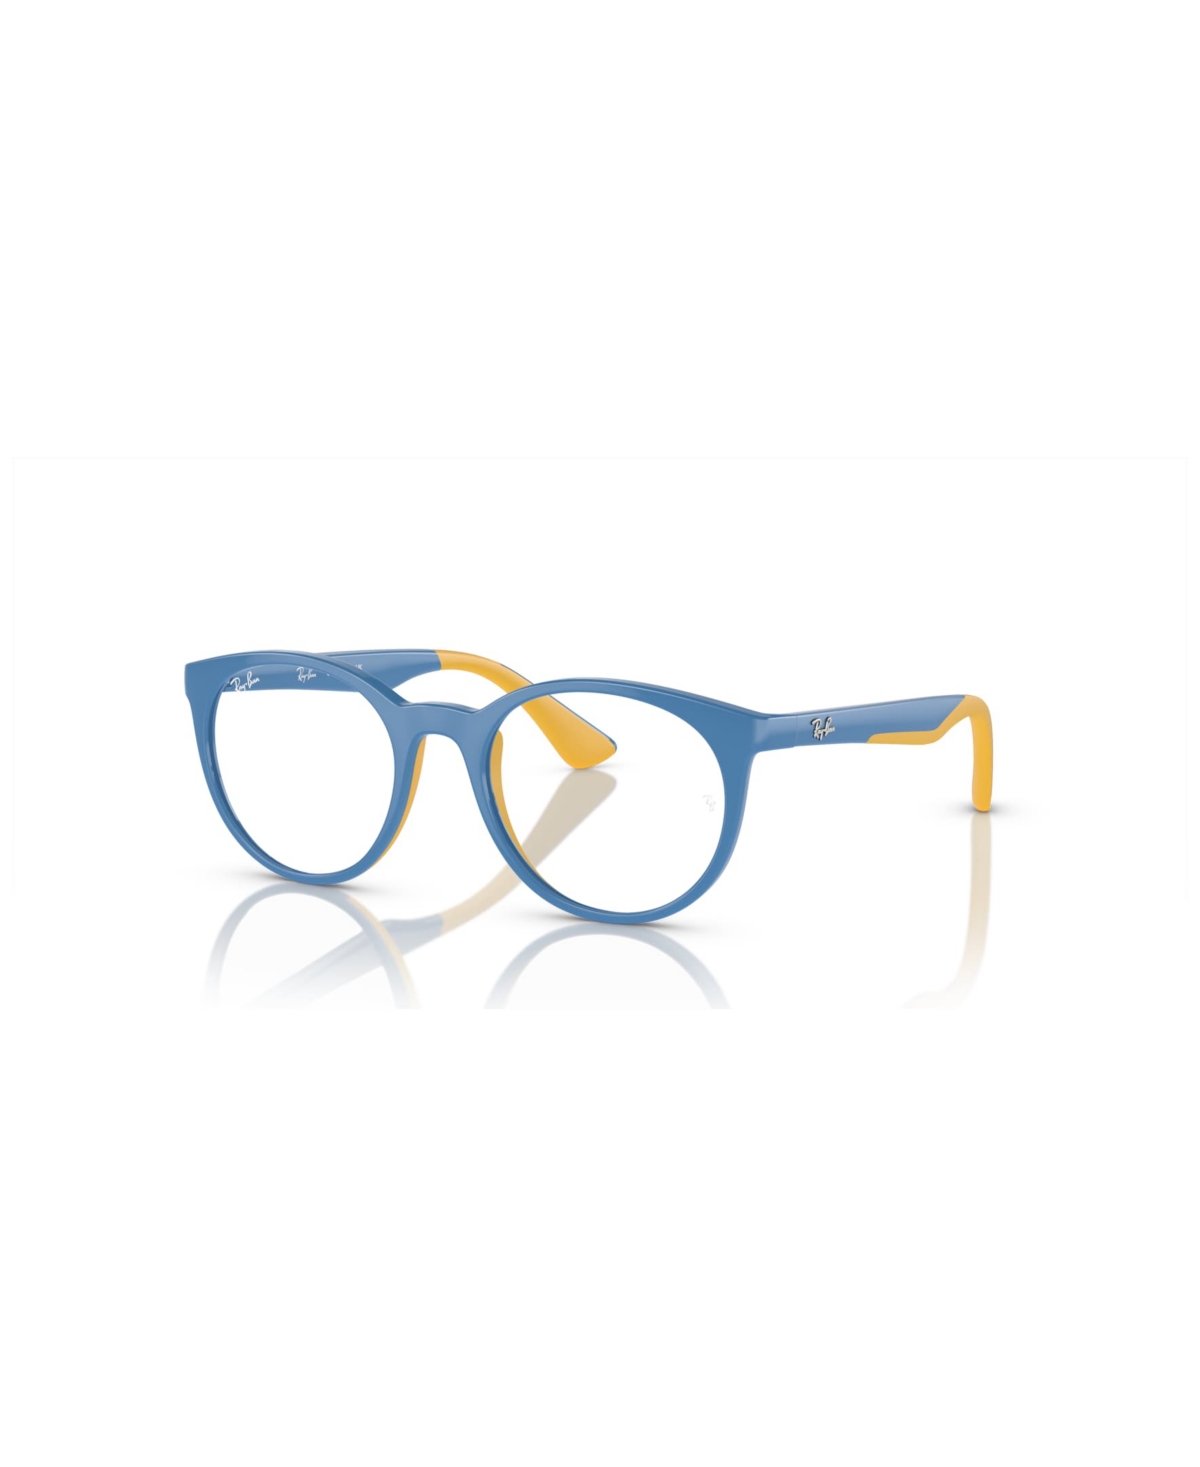 Child Eyeglasses, RB1628 - Light Blue On Yellow